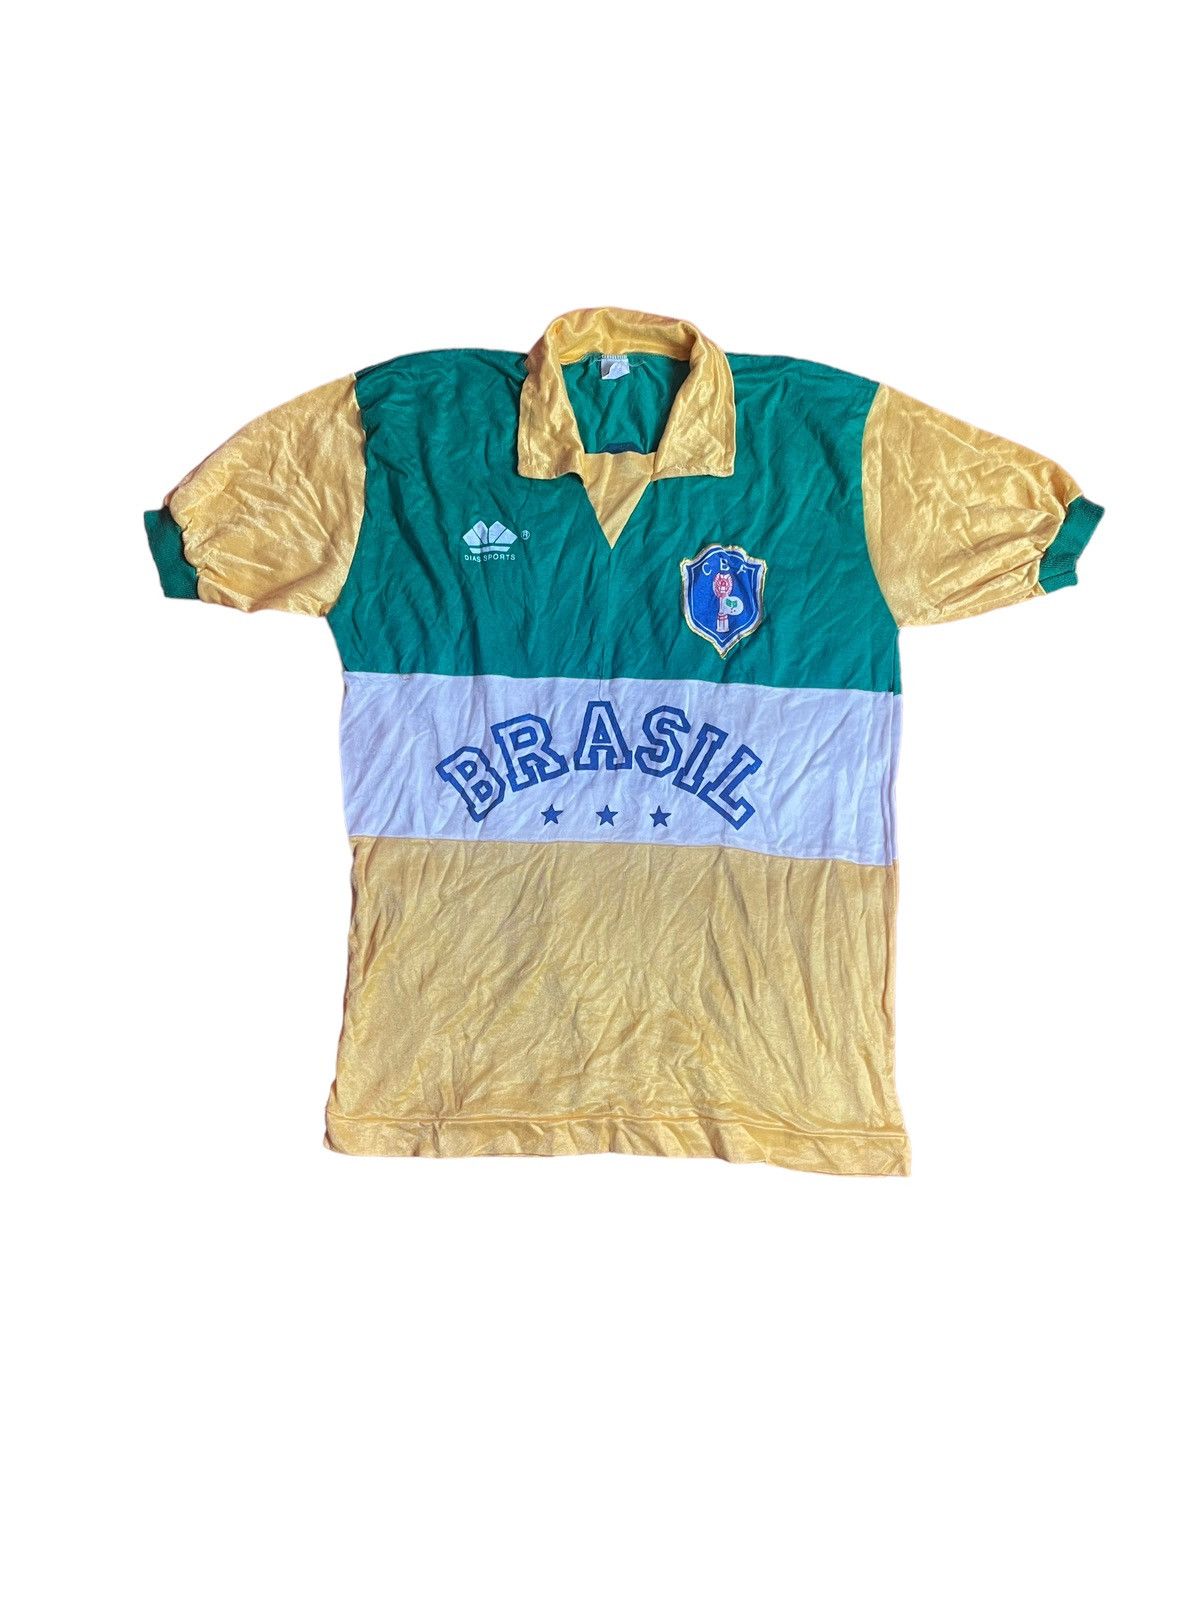 Vintage Vintage 80’s Dias Sport Brazil jersey | Grailed